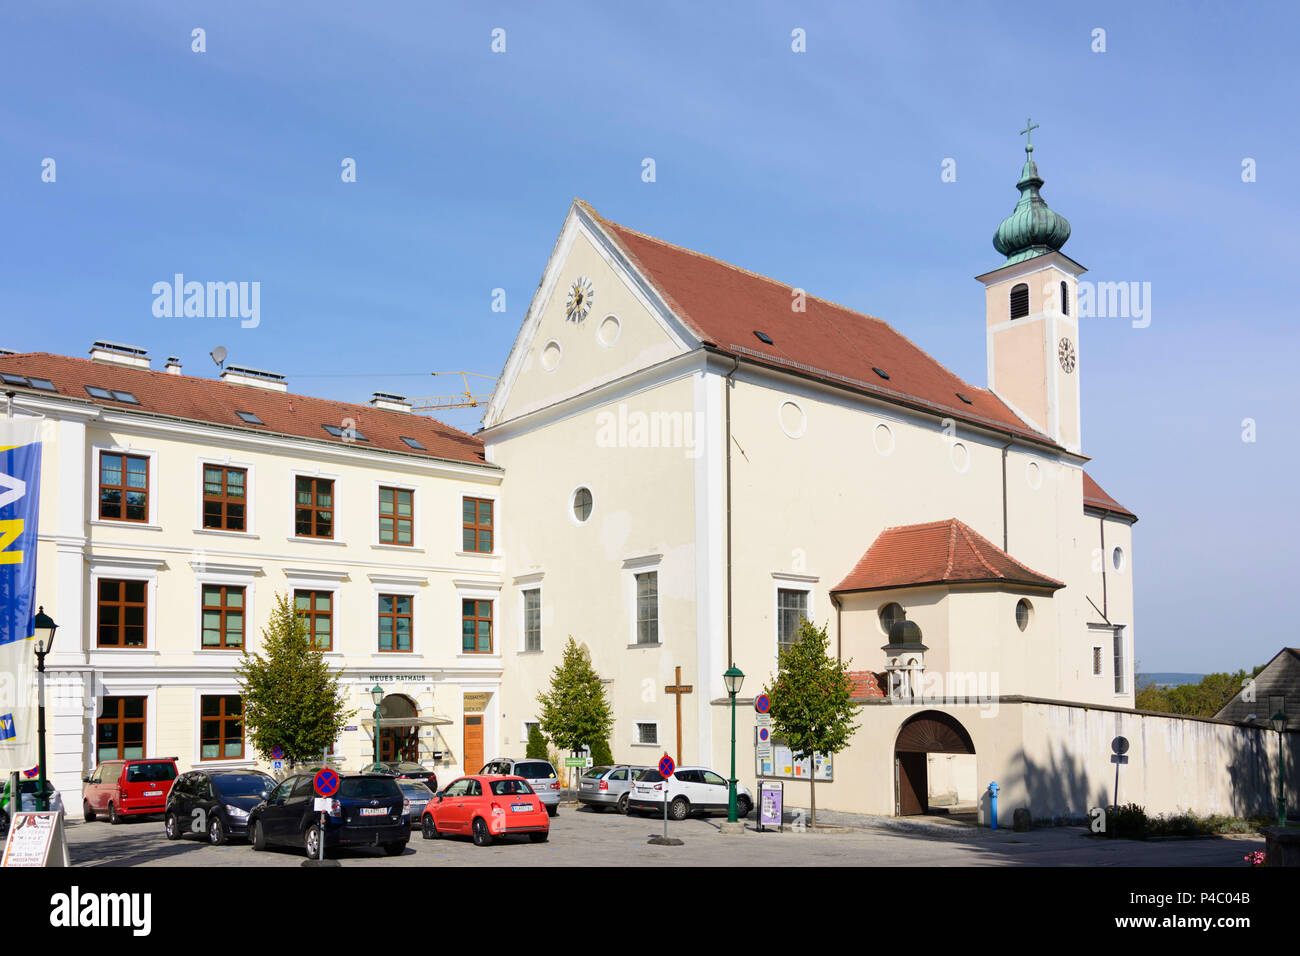 Neulengbach, chiesa, Municipio nuovo Wienerwald (Vienna Woods), Austria Inferiore, Austria Foto Stock